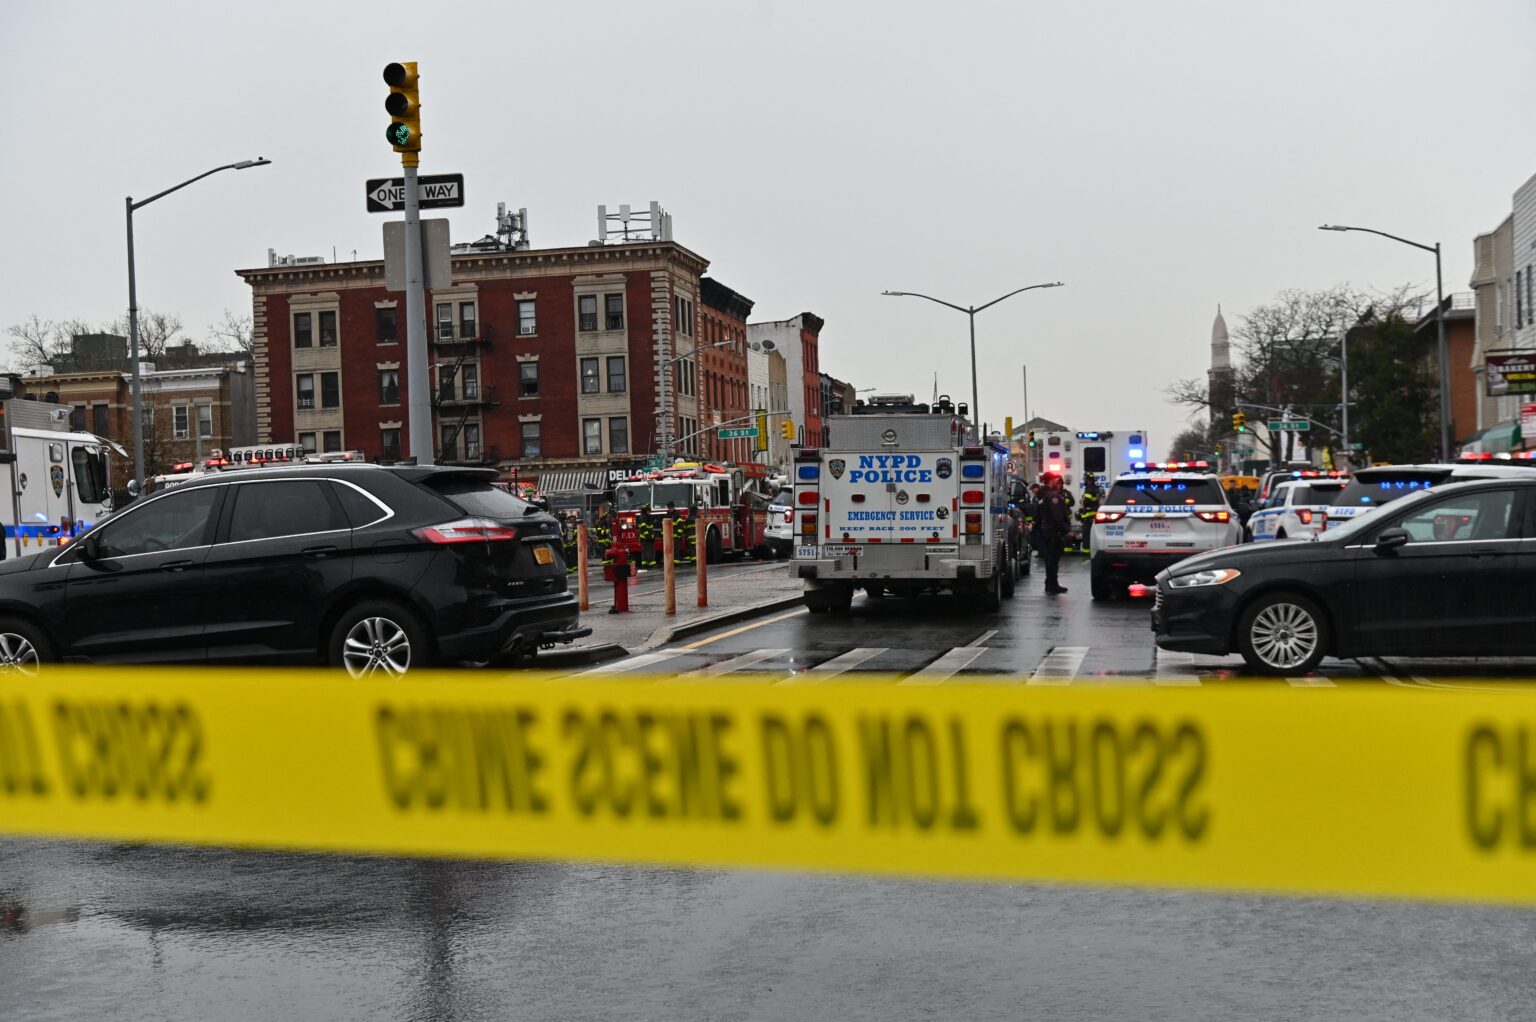 16 injured, including 8 shot in Brooklyn subway shooting NYC